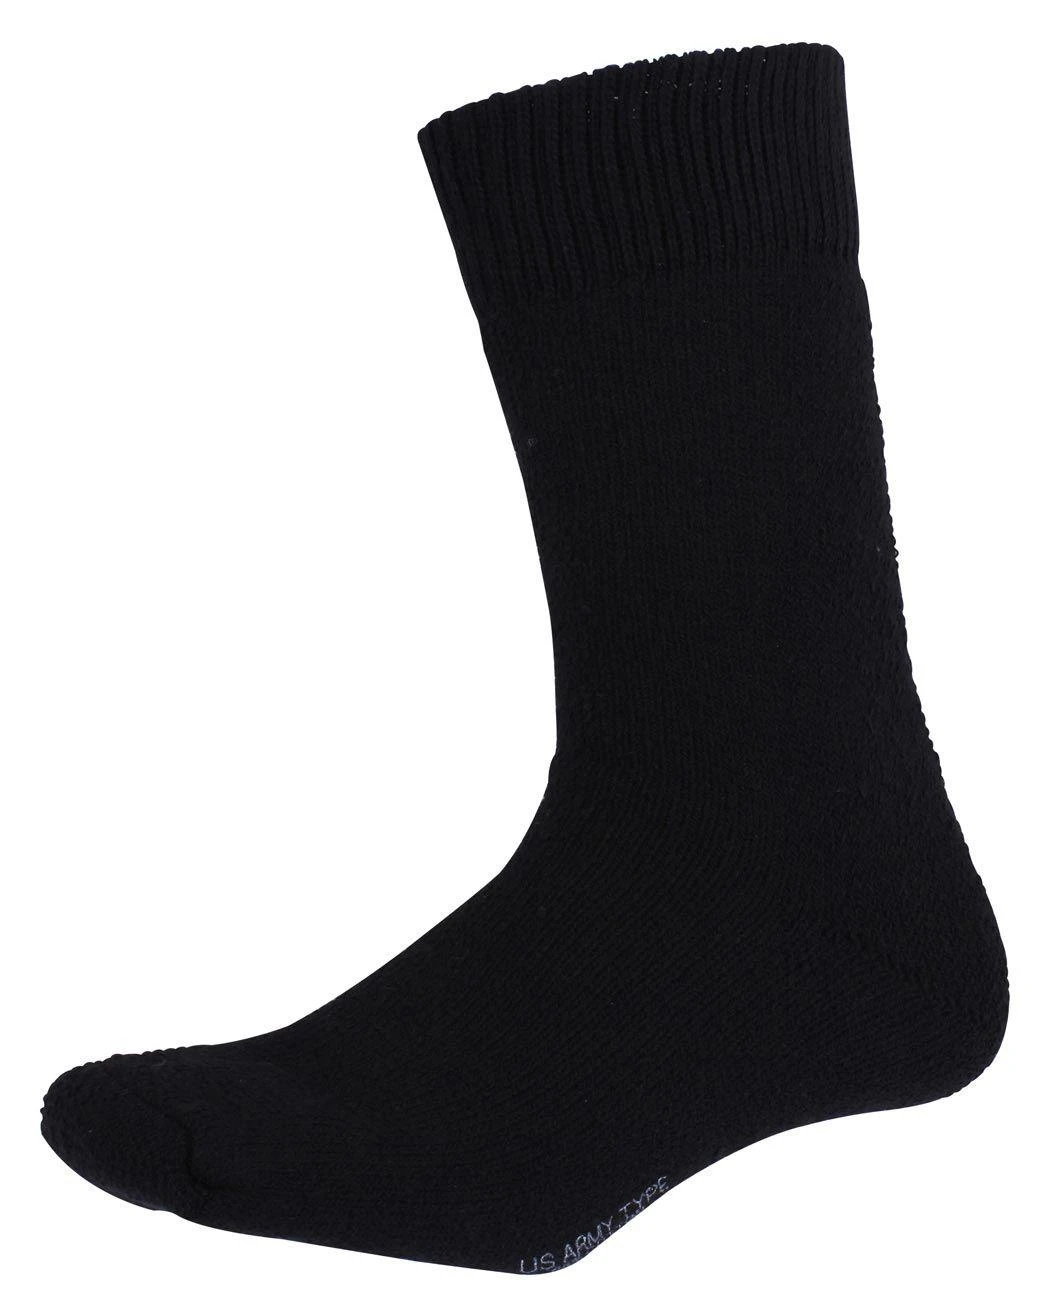 Buy Rothco Thermal Boot Socks Money Back Guarantee Army Star